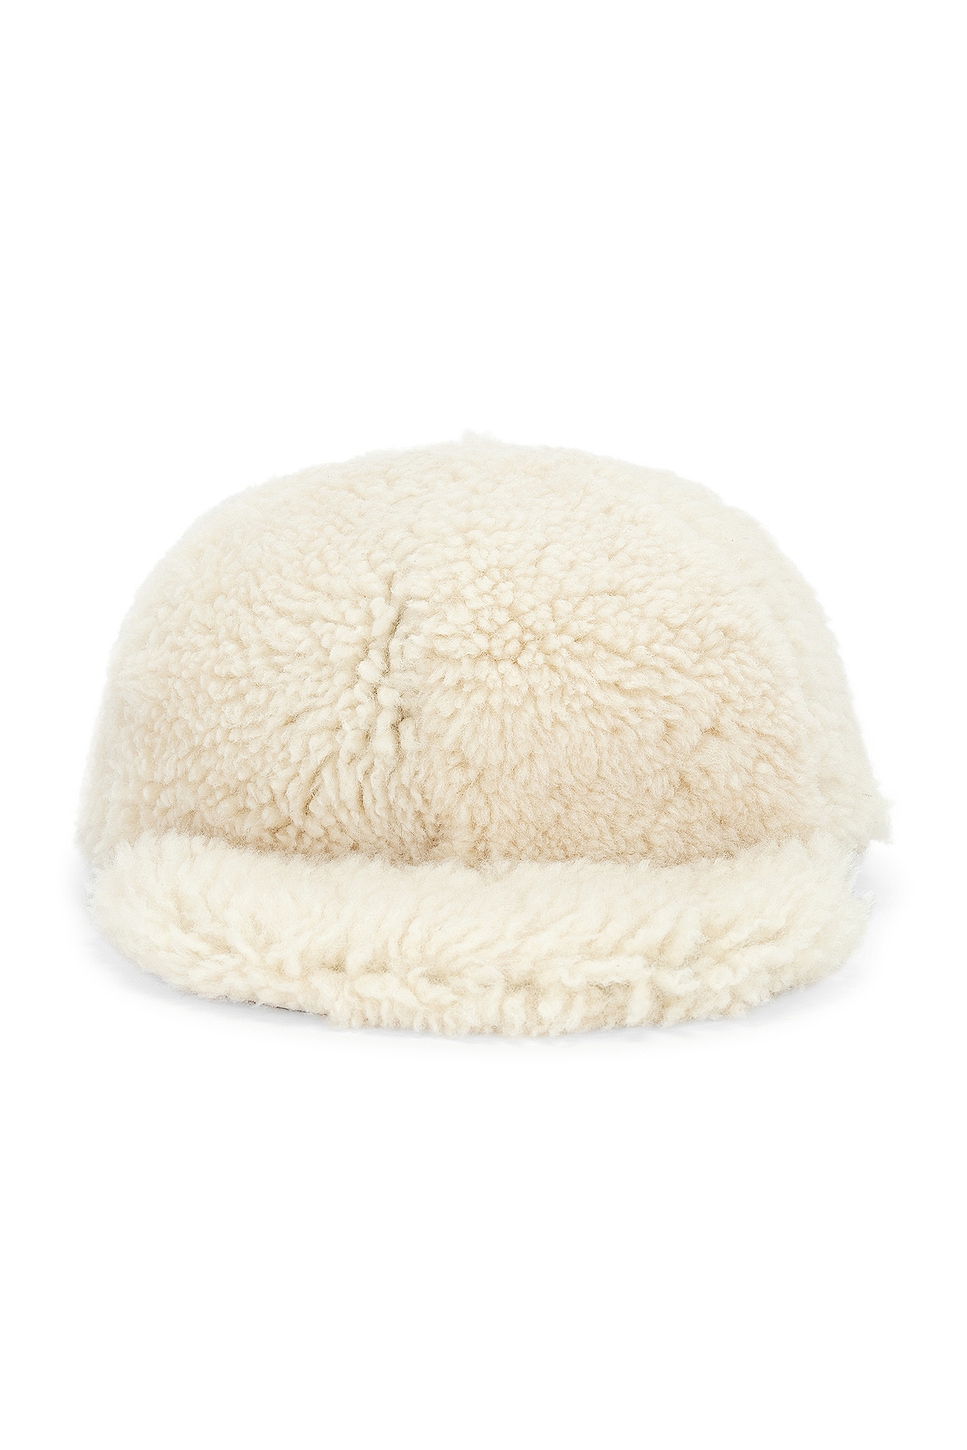 Davos Shearling Hat in Cream